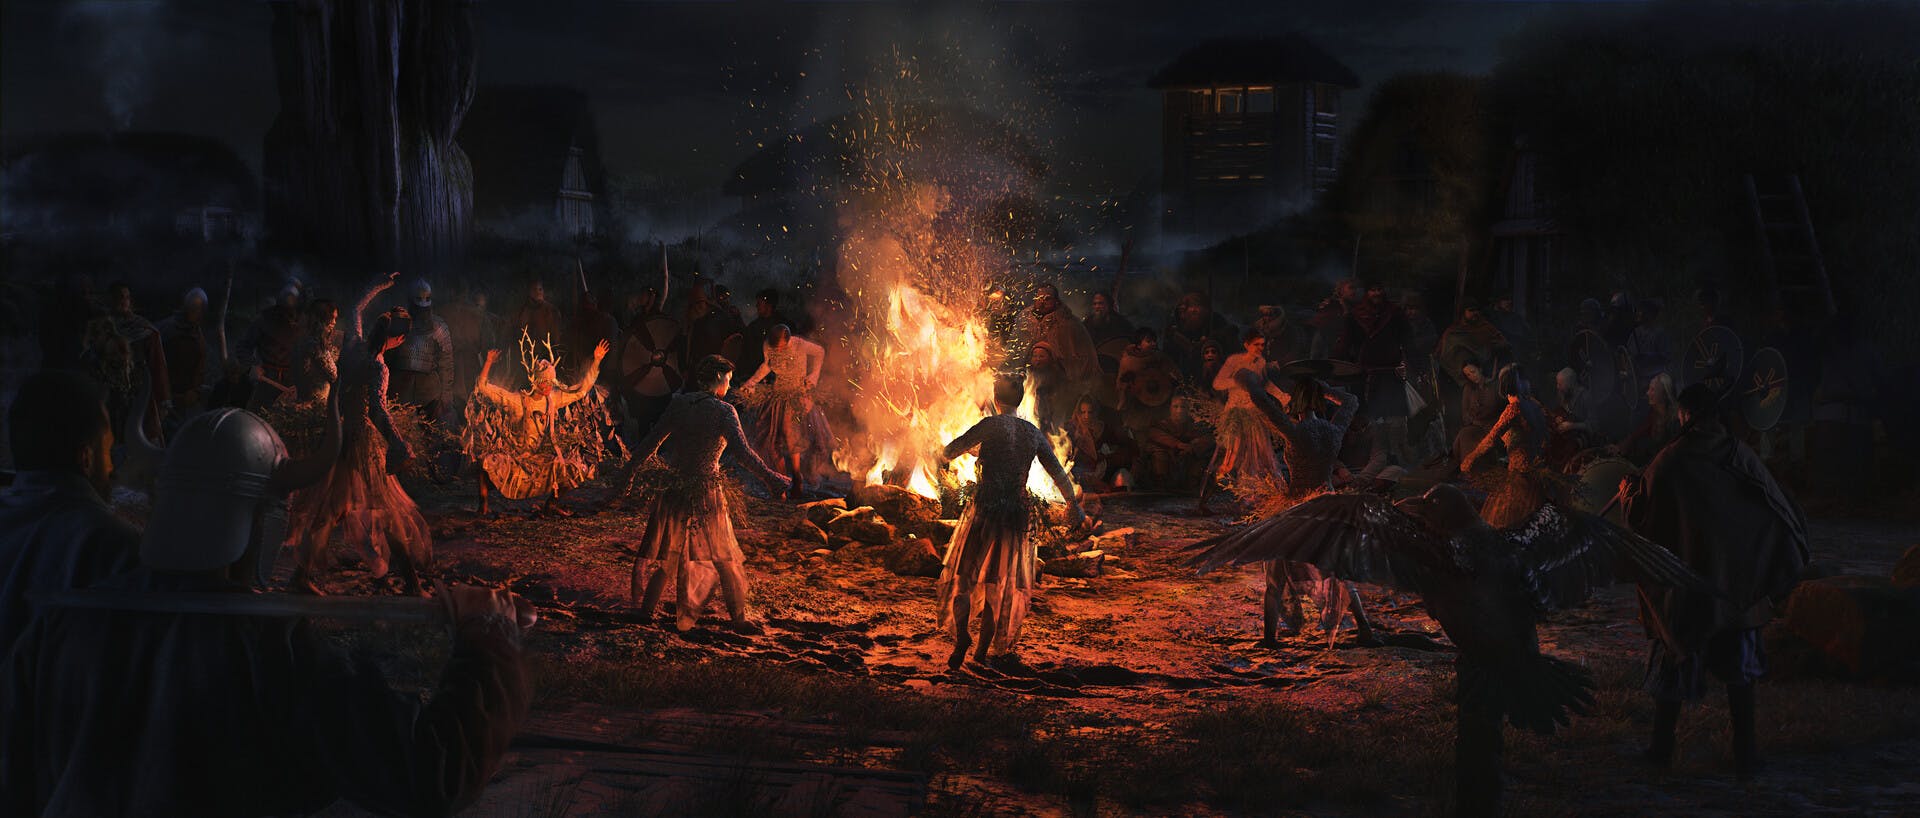 Dancing around a fire